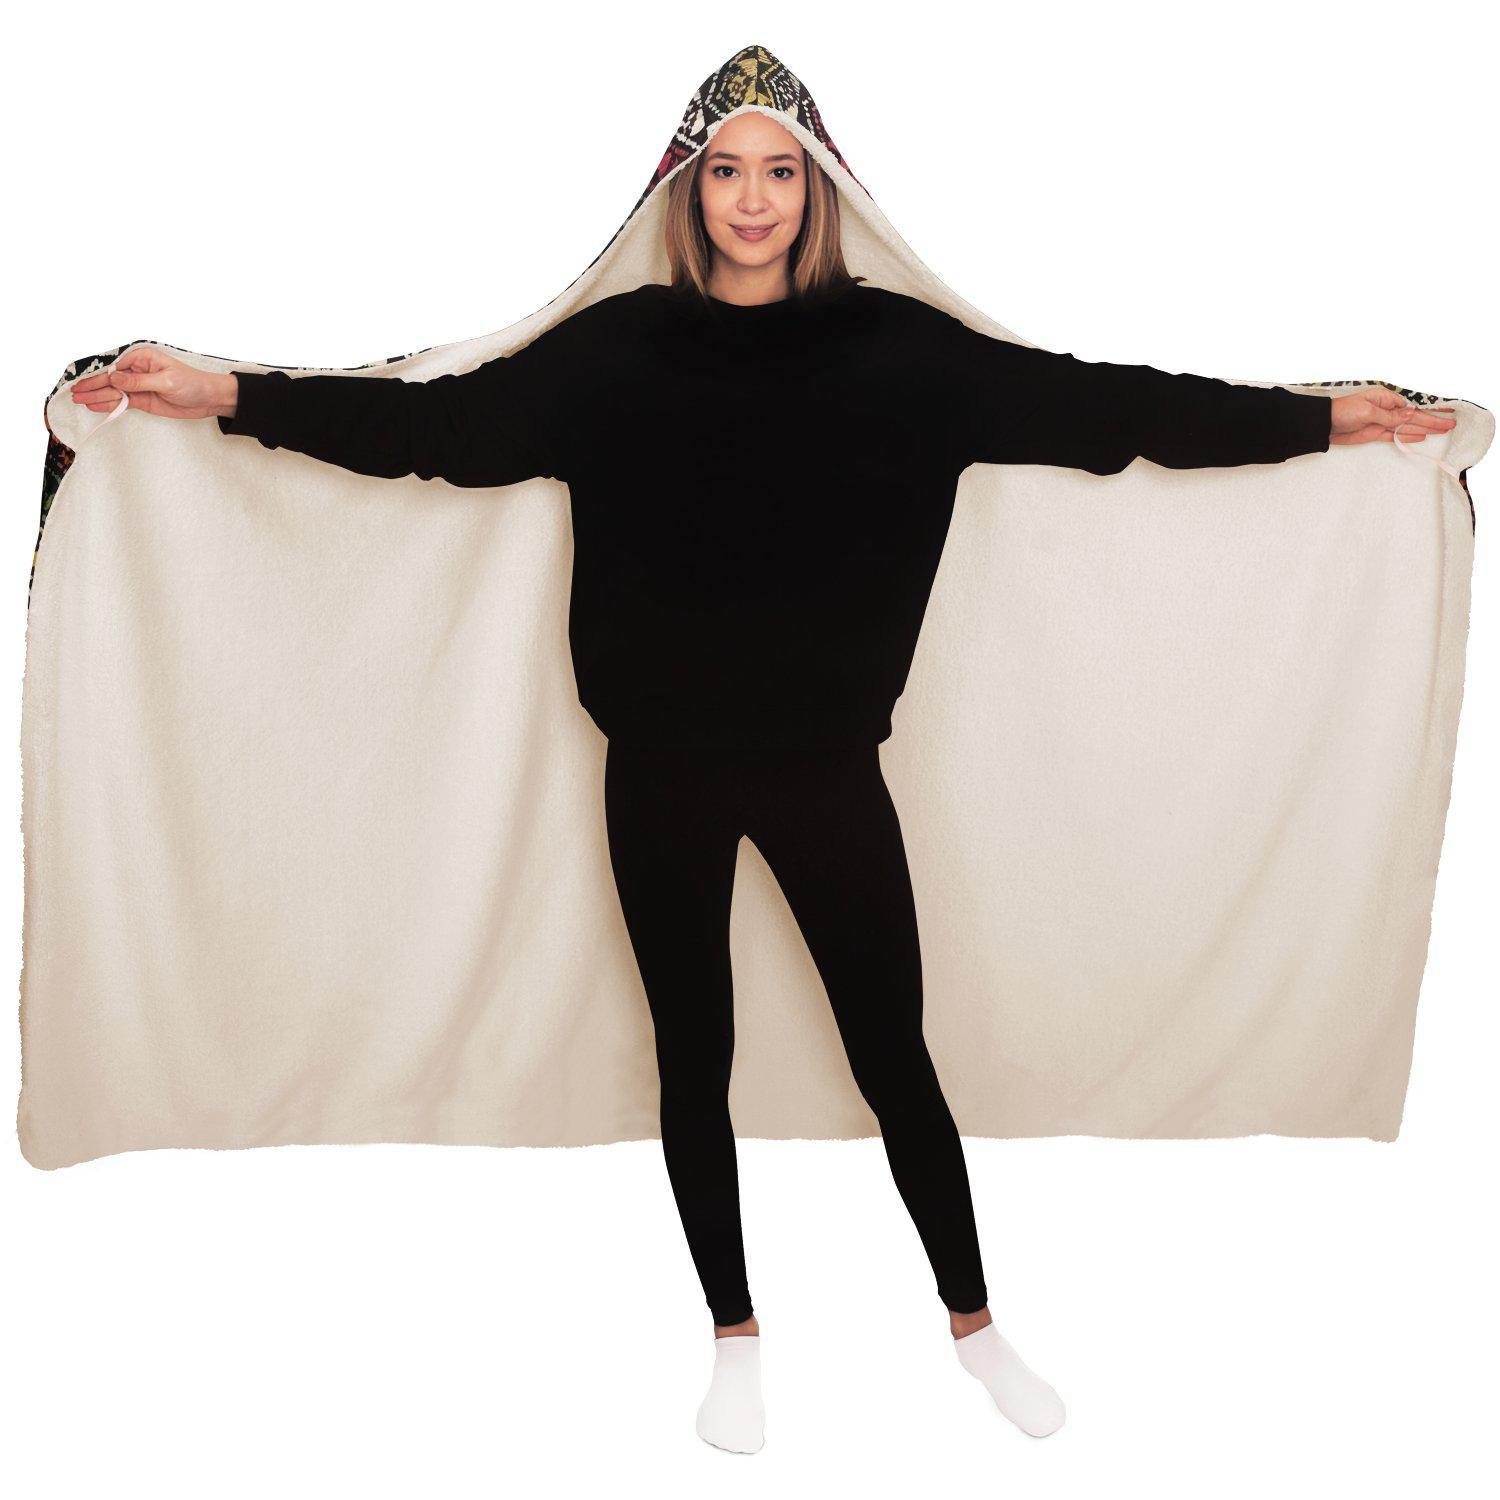 Hooded Blanket - AOP Hooded Blanket, Banjara Culture Design